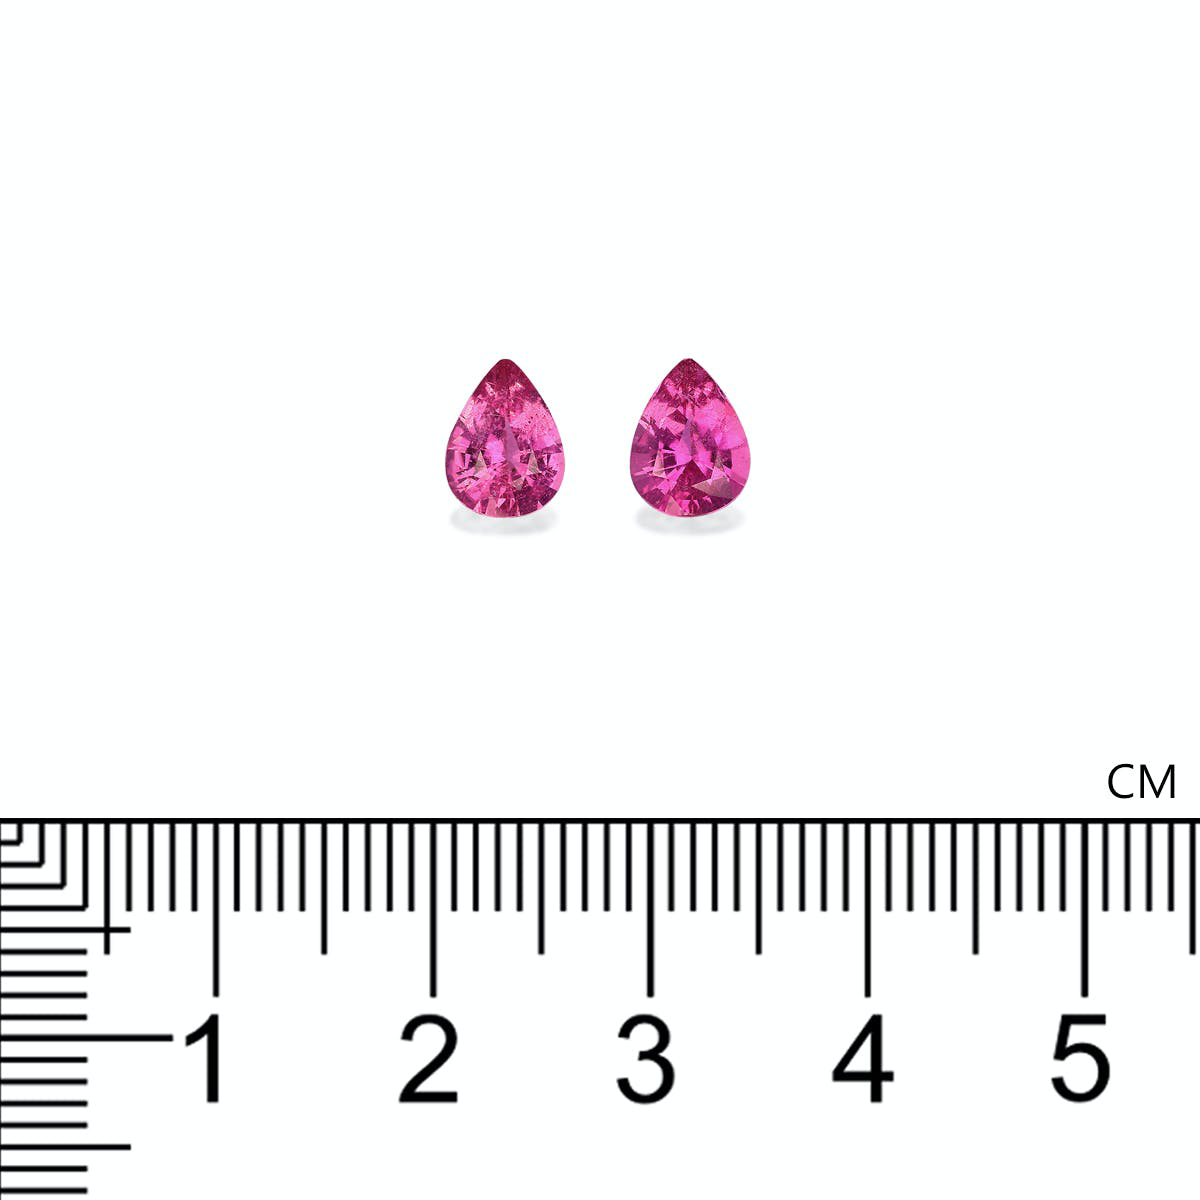 Fuscia Pink Rubellite Tourmaline 1.55ct - 7x5mm Pair (RL1295)